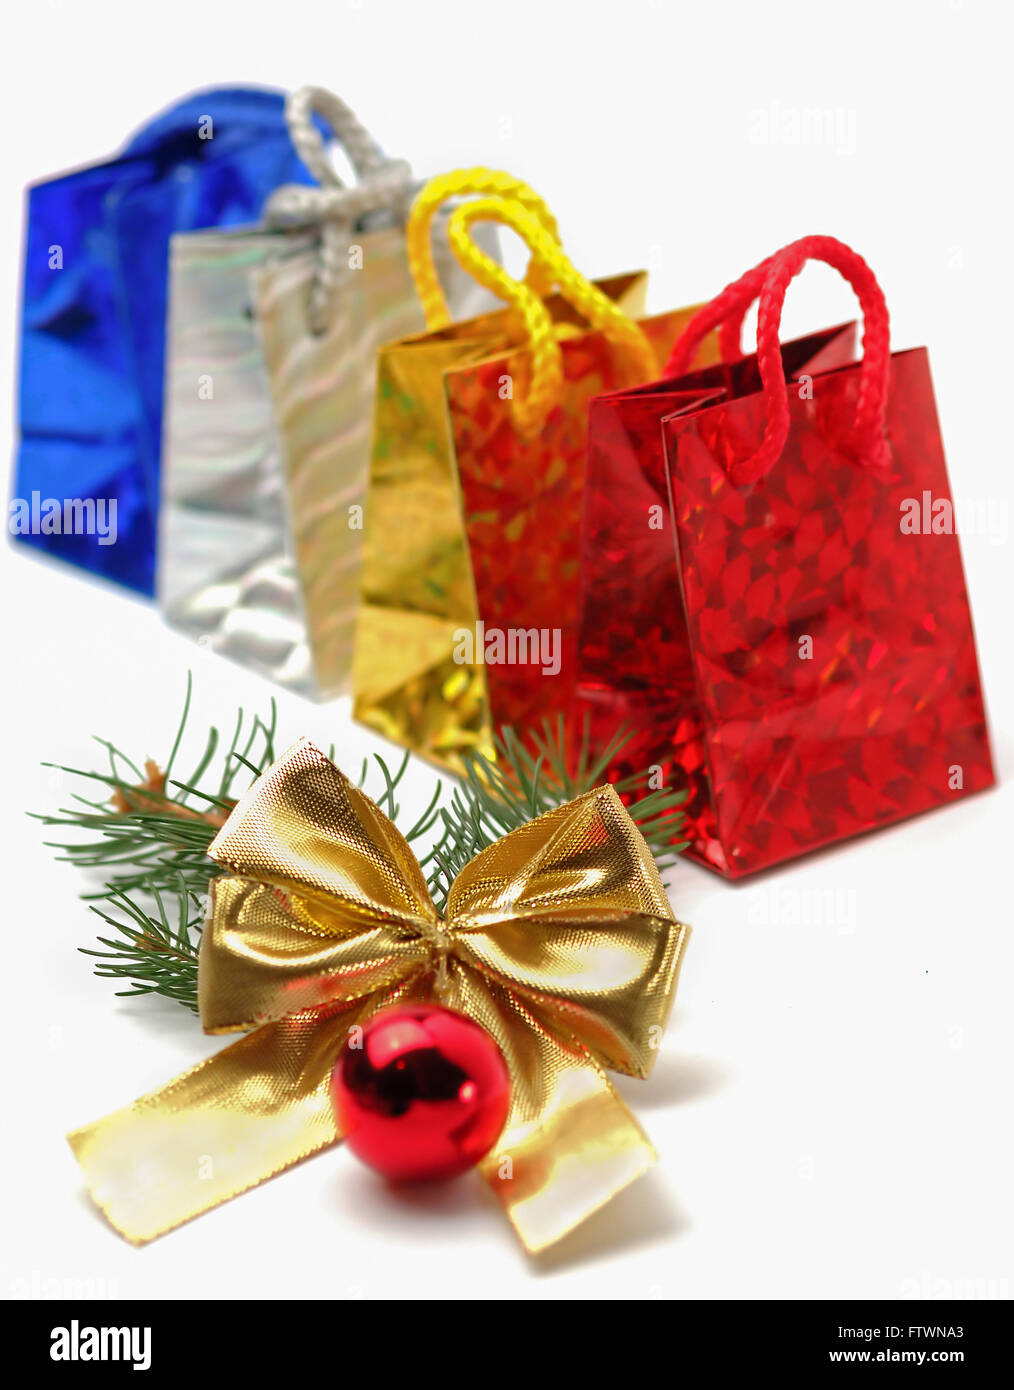 Christmas shopping on white background Stock Photo